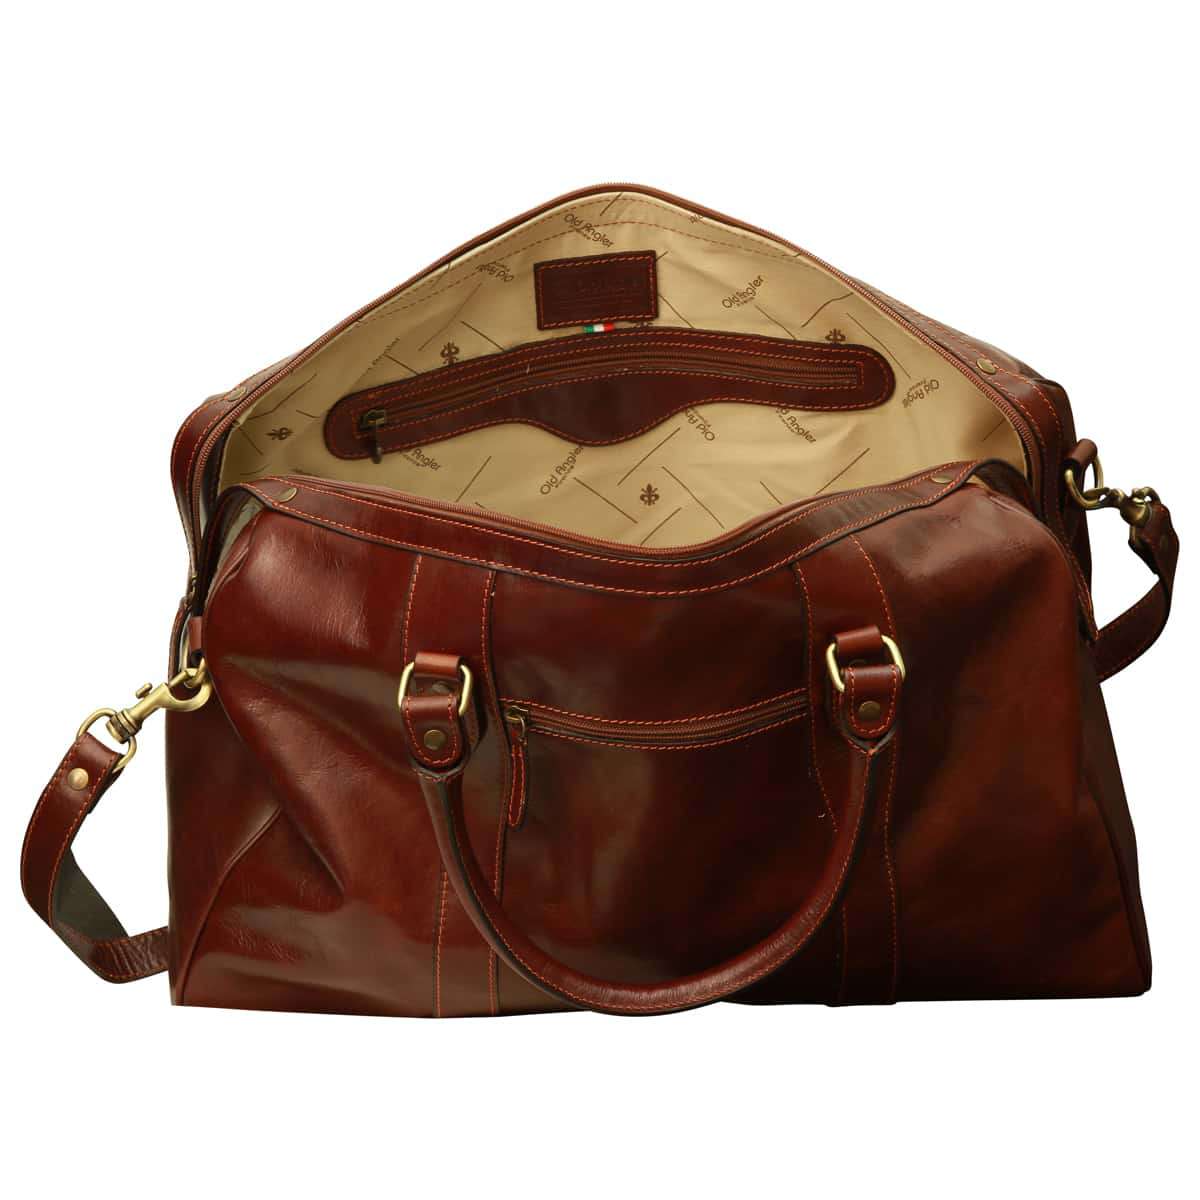 Travel Bag with shoulder strap - Brown | 108805MA | EURO | Old Angler Firenze